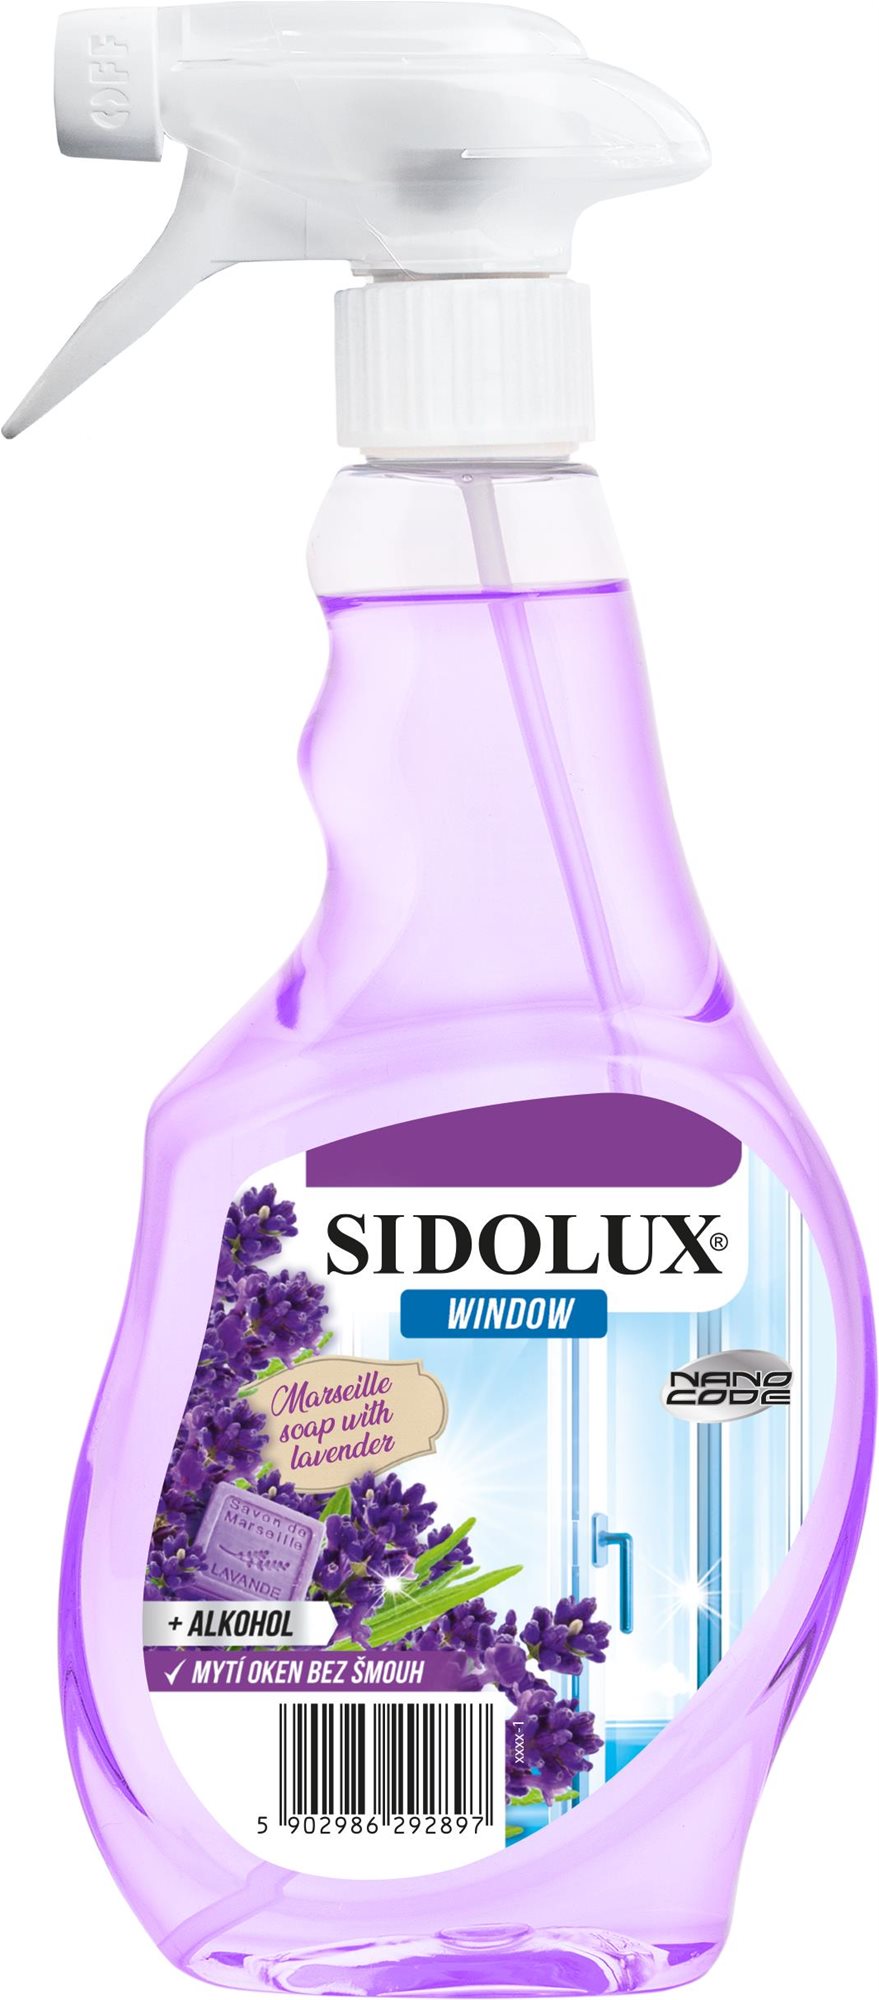 SIDOLUX Window Nano Code Marseill Soap with Lavender 500 ml